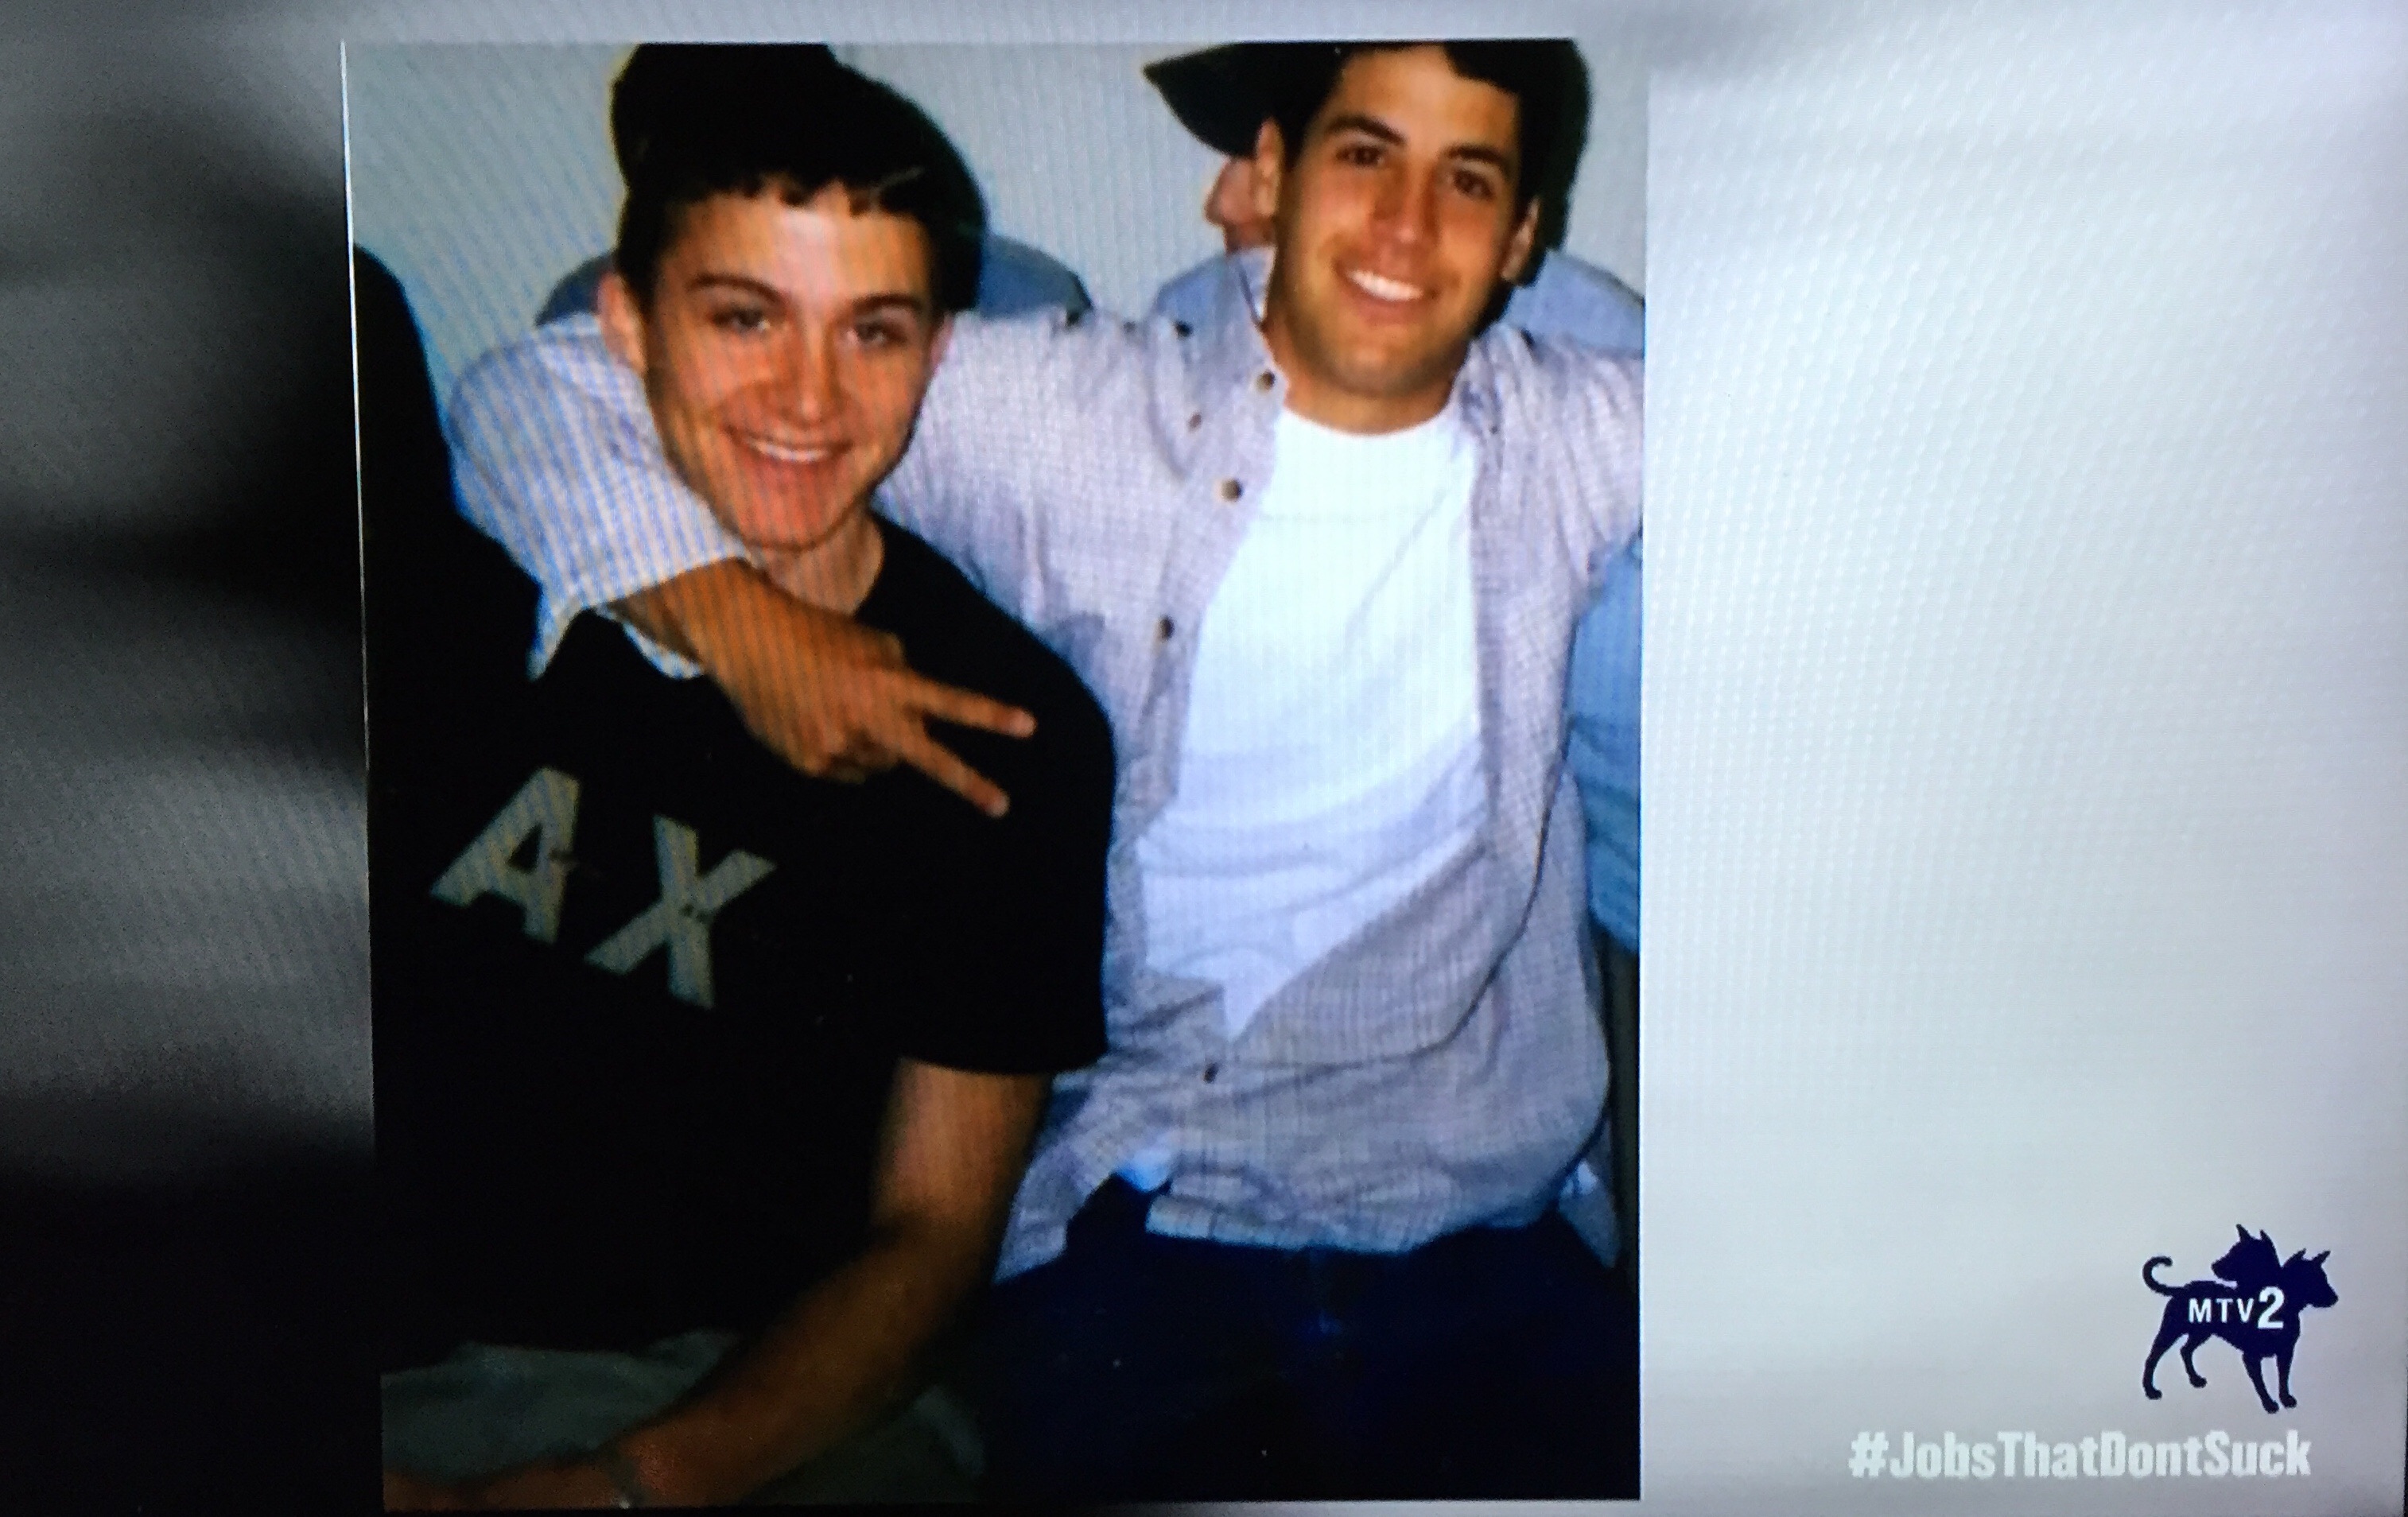 Nick Friedman and Omar Soliman in highschool on MTV